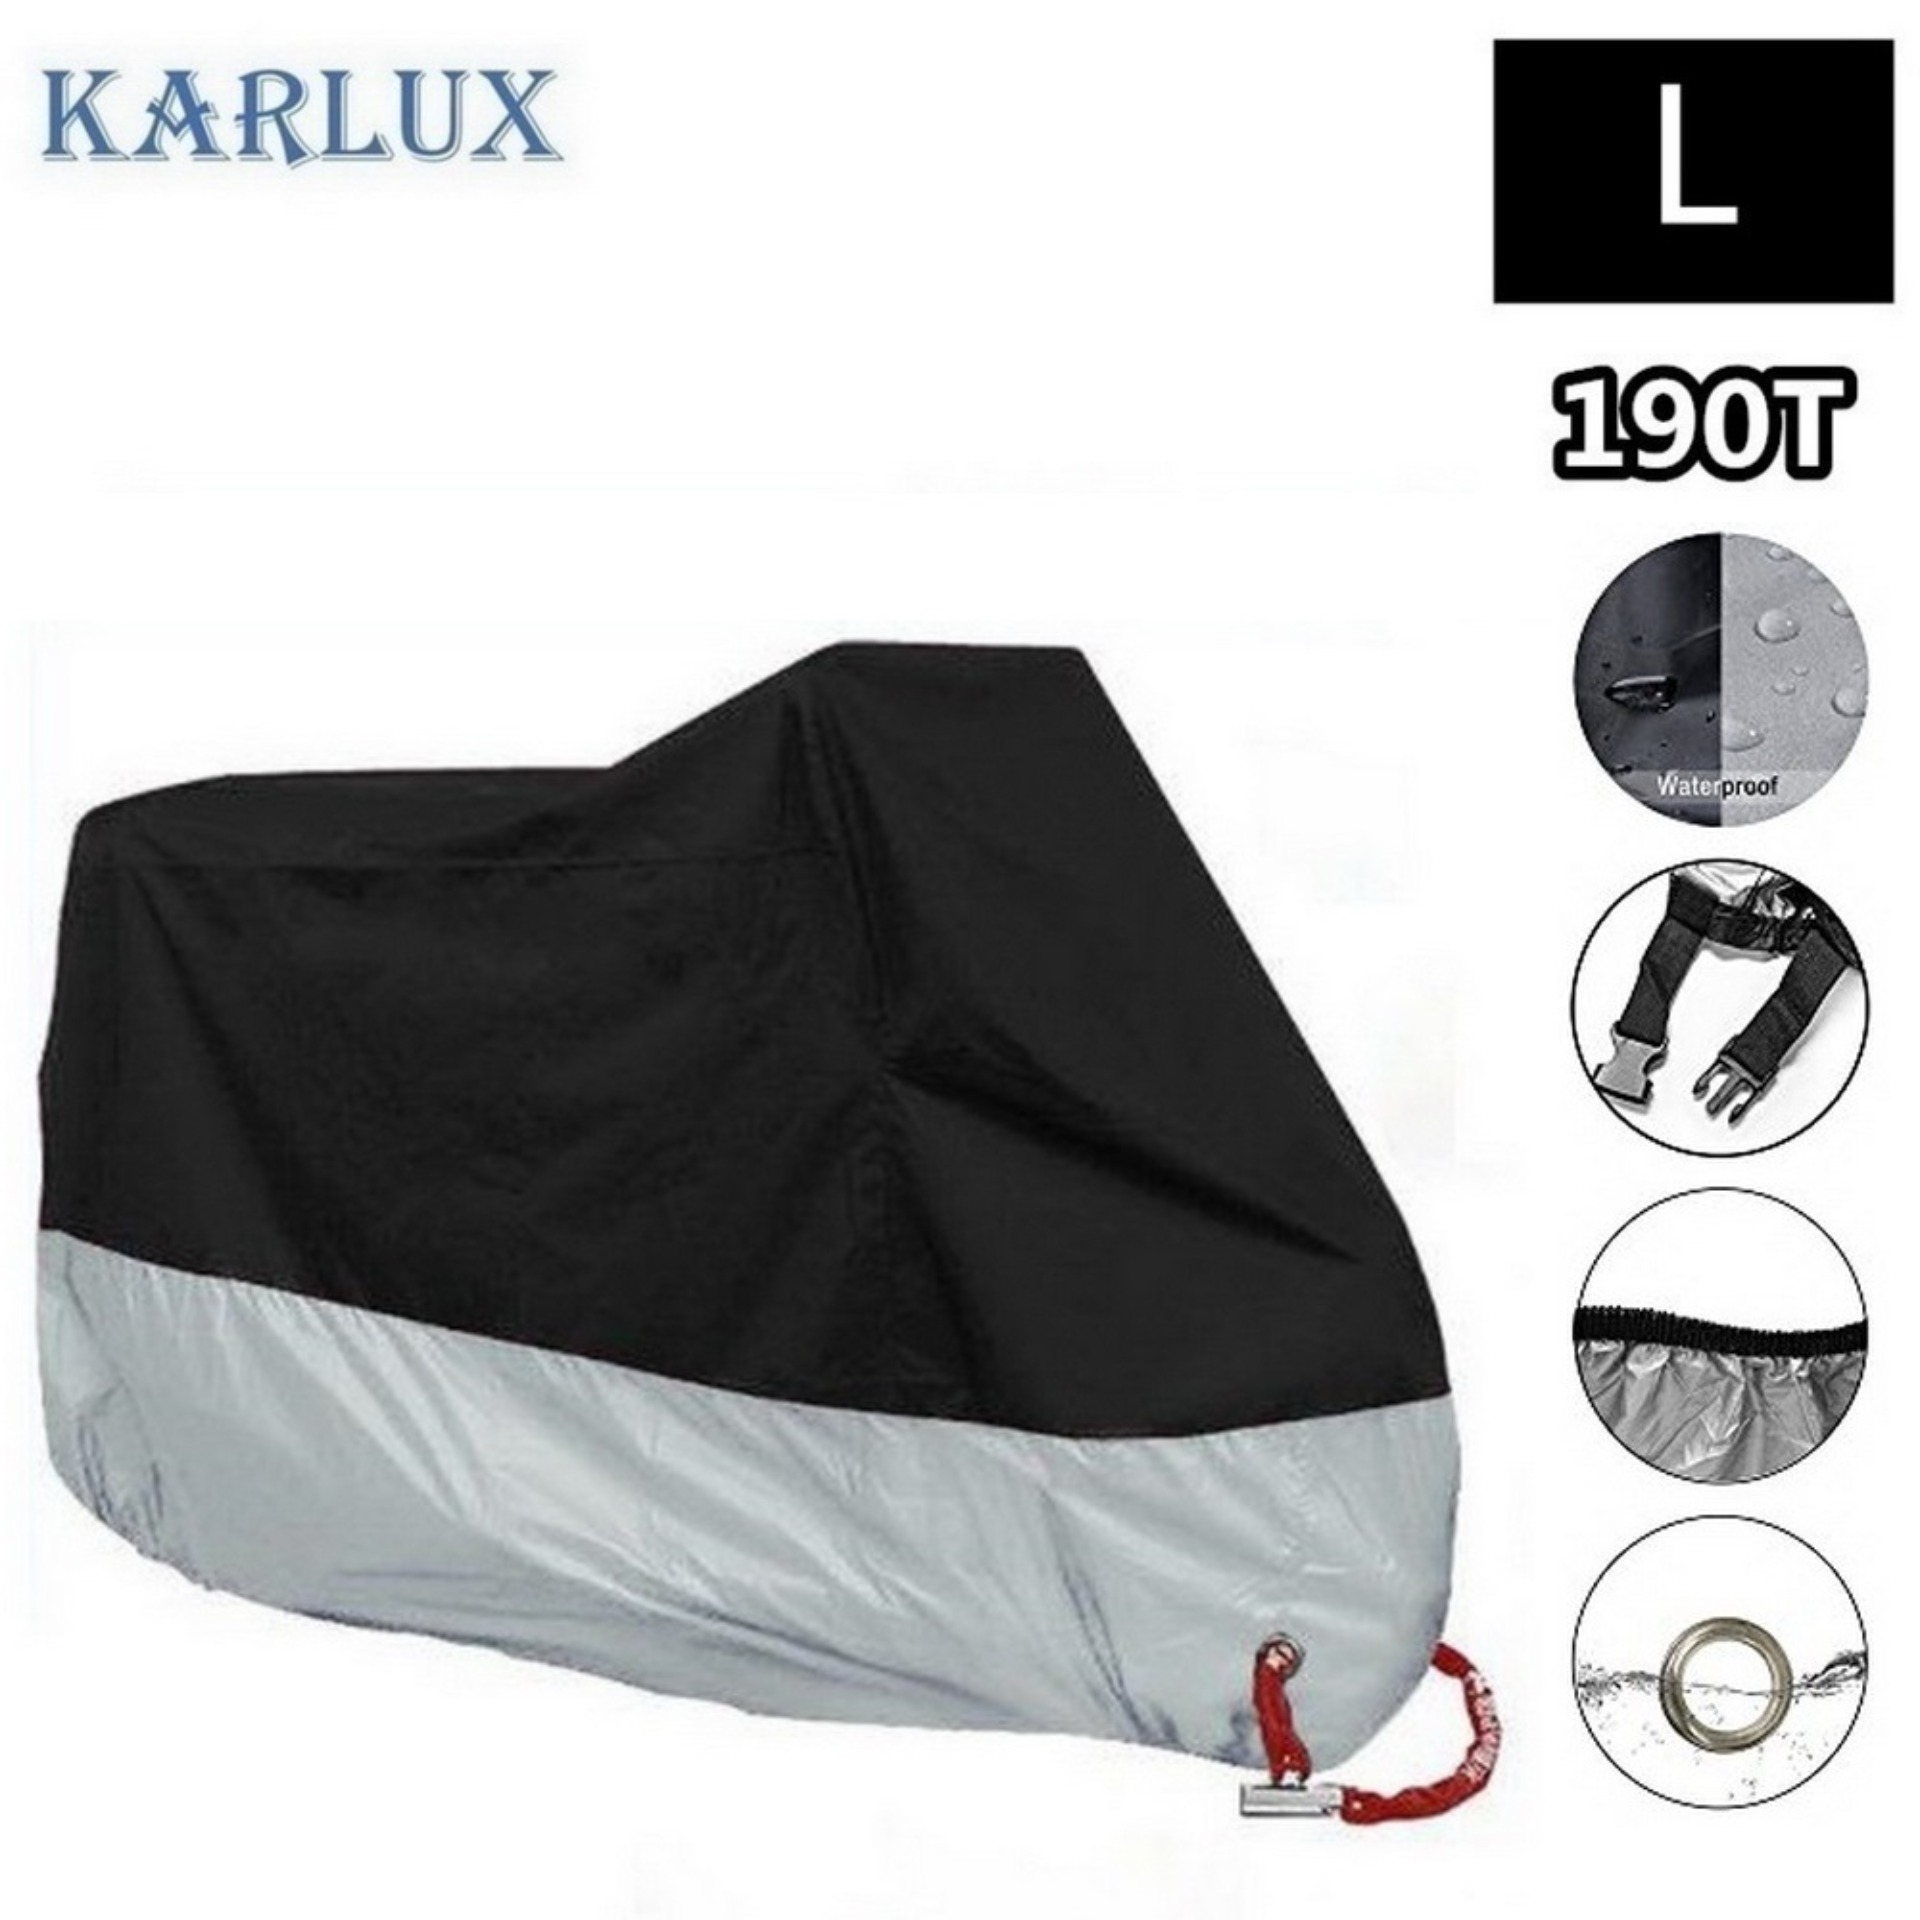 Karlux Large ผ้าคลุมรถมอเตอร์ไซค์ บิ๊กไบค์ จักยาน กันน้ำ กันแดด กันฝุ่น สี Silver/Black Motorbike Waterproof Cover Protector Case Cover Rain Protection Breathable